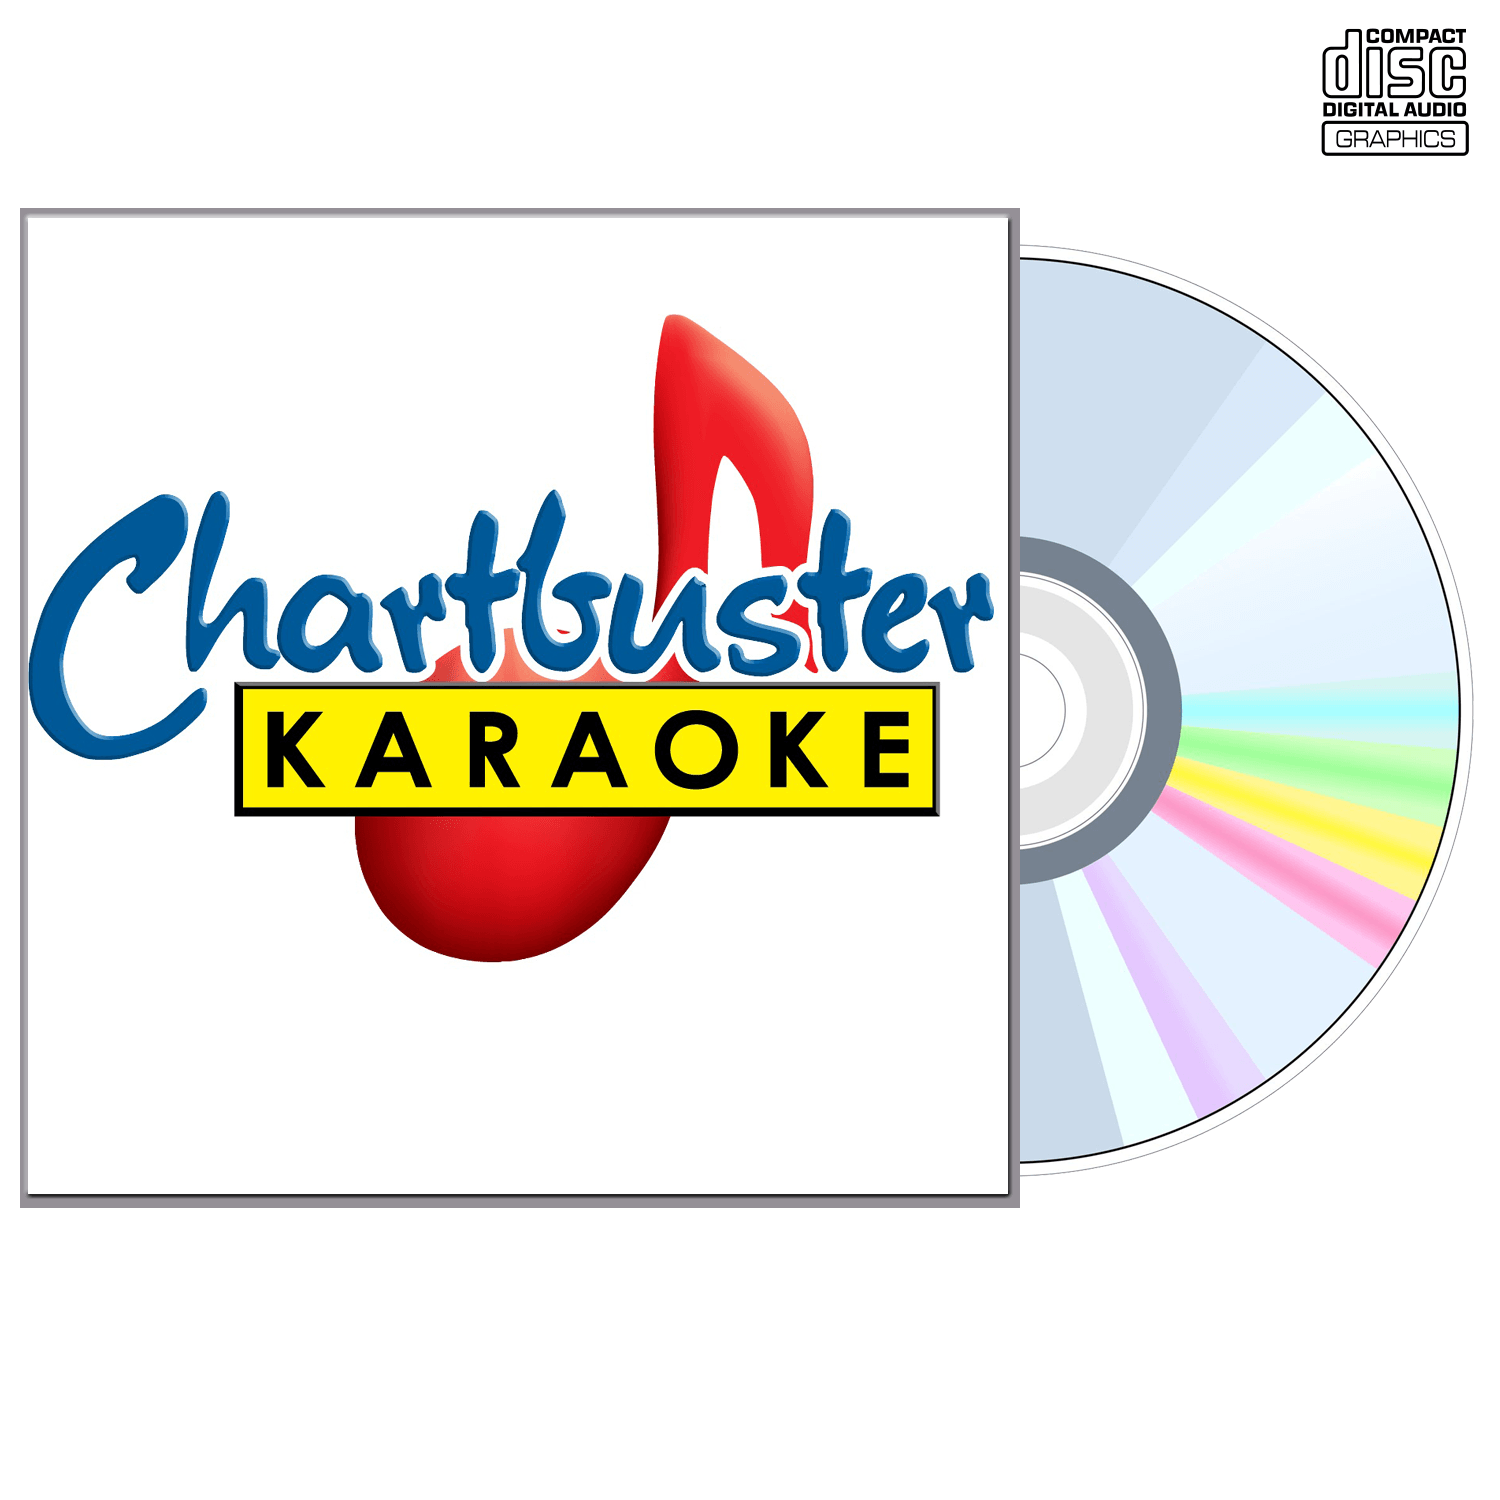 3 Doors Down - CD+G - Chartbuster Karaoke - Karaoke Home Entertainment